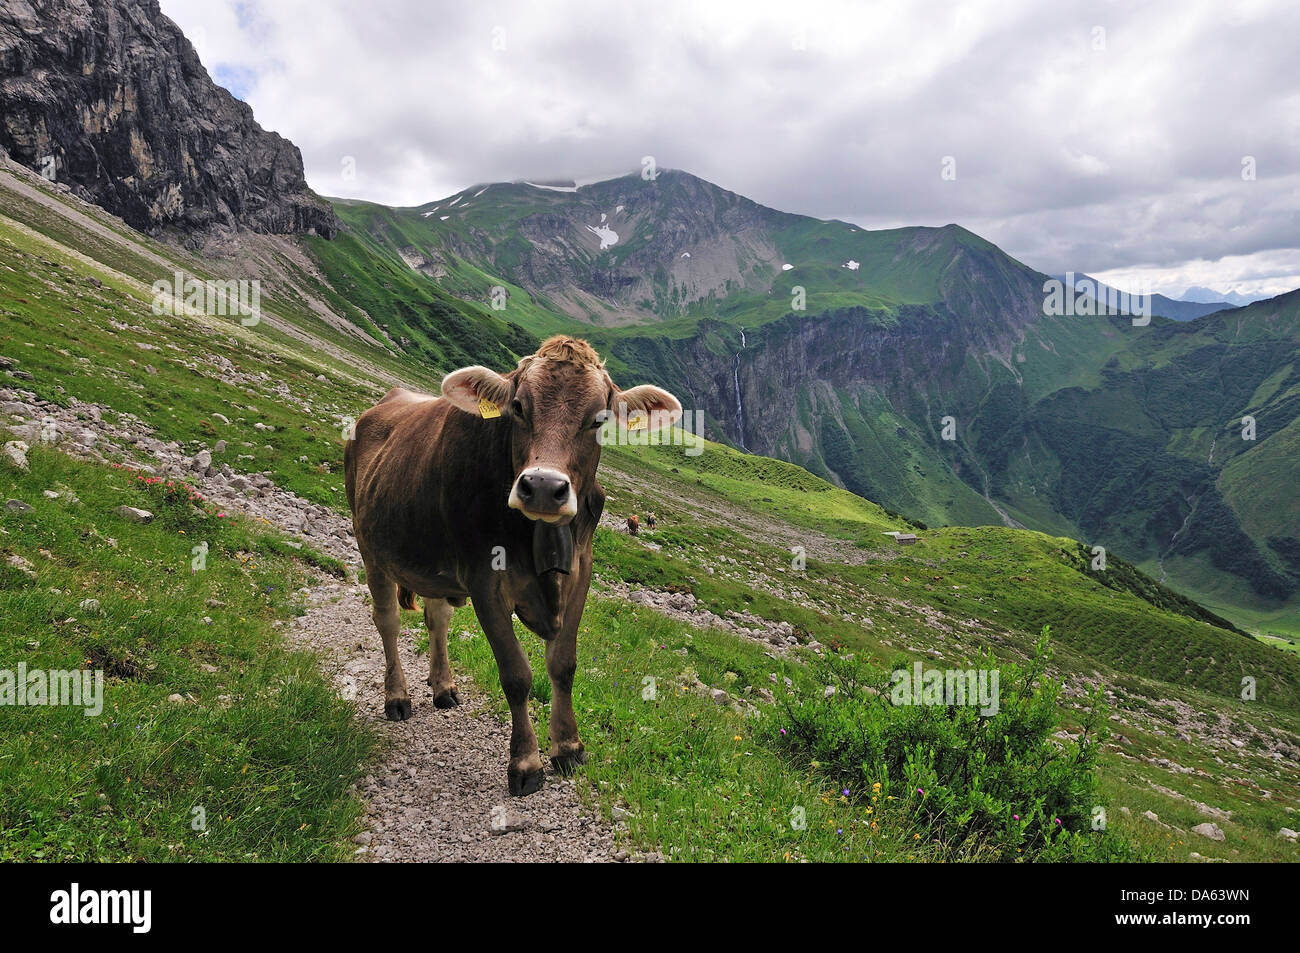 young, bovine animal, cow, animal, Bos primigenius taurus, Oytal, Oberstdorf, Allgäu, Alps, Bavaria, Germany, Europe, agricultur Stock Photo